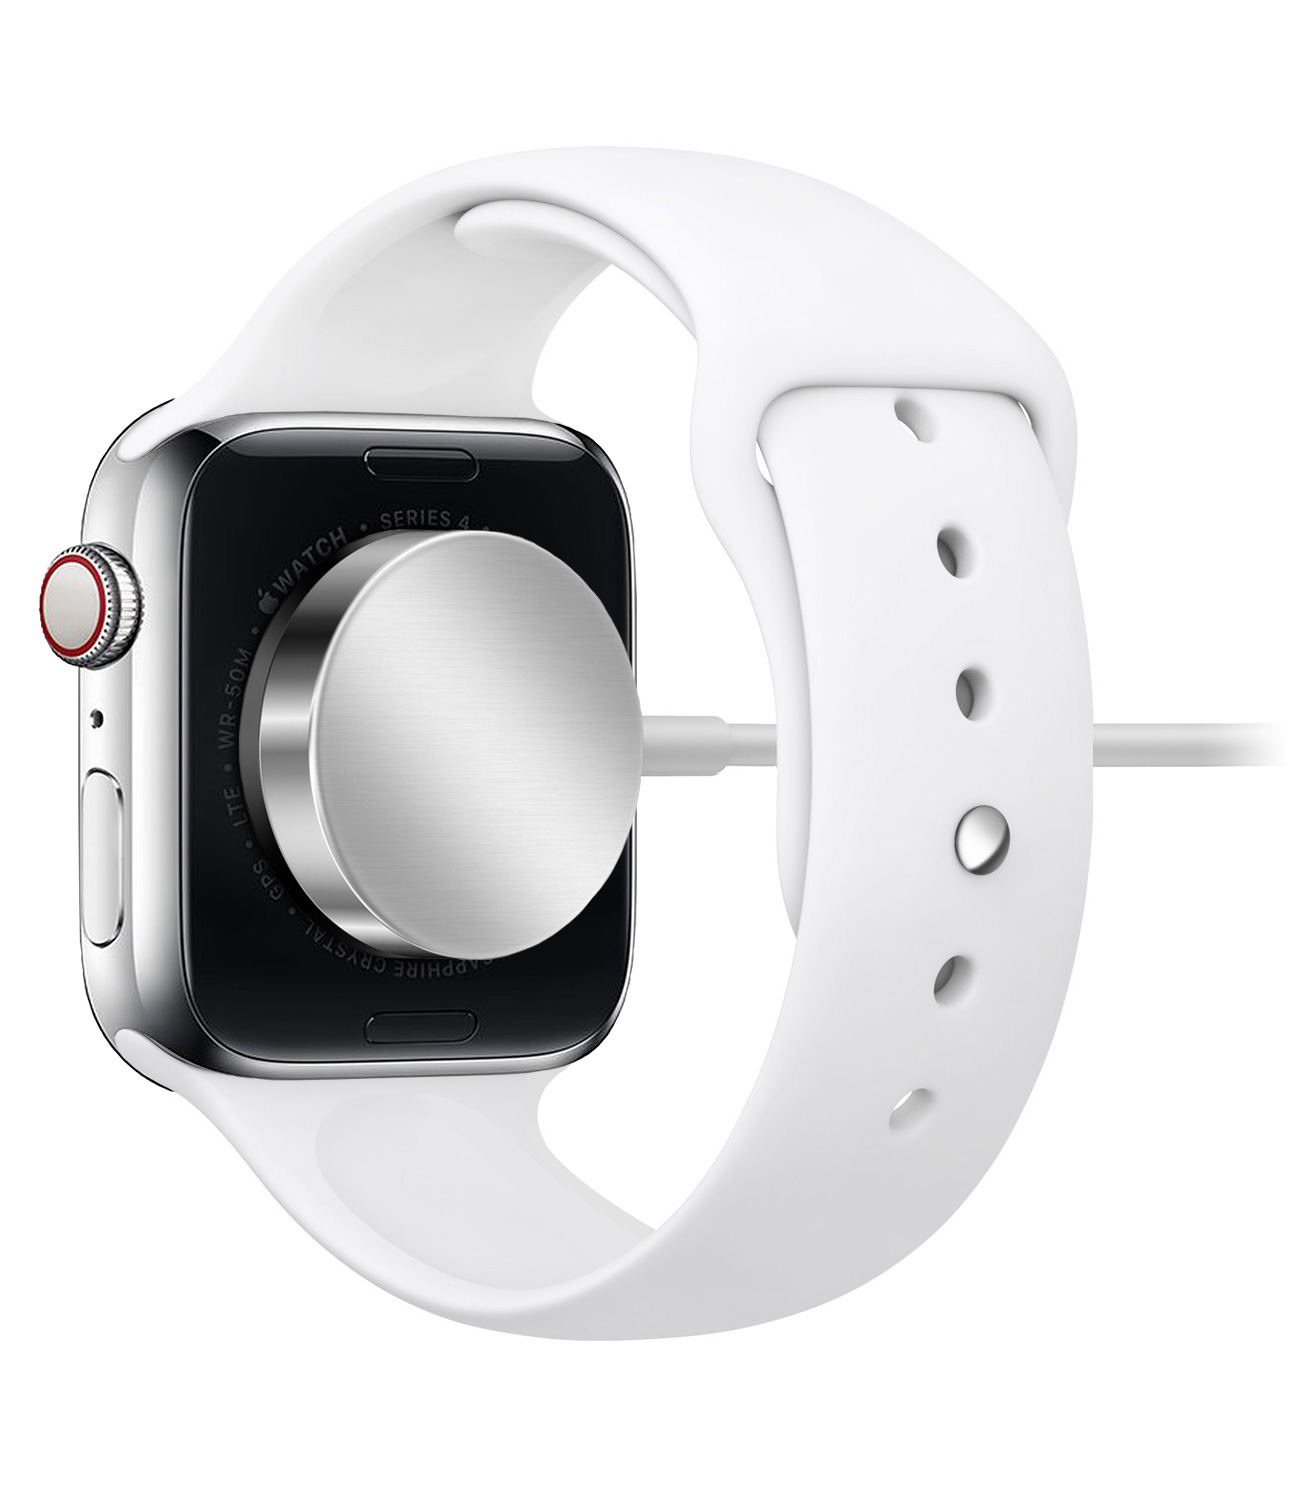 Apple Watch のバッテリー残量を確認して充電する - Apple サポート (日本)